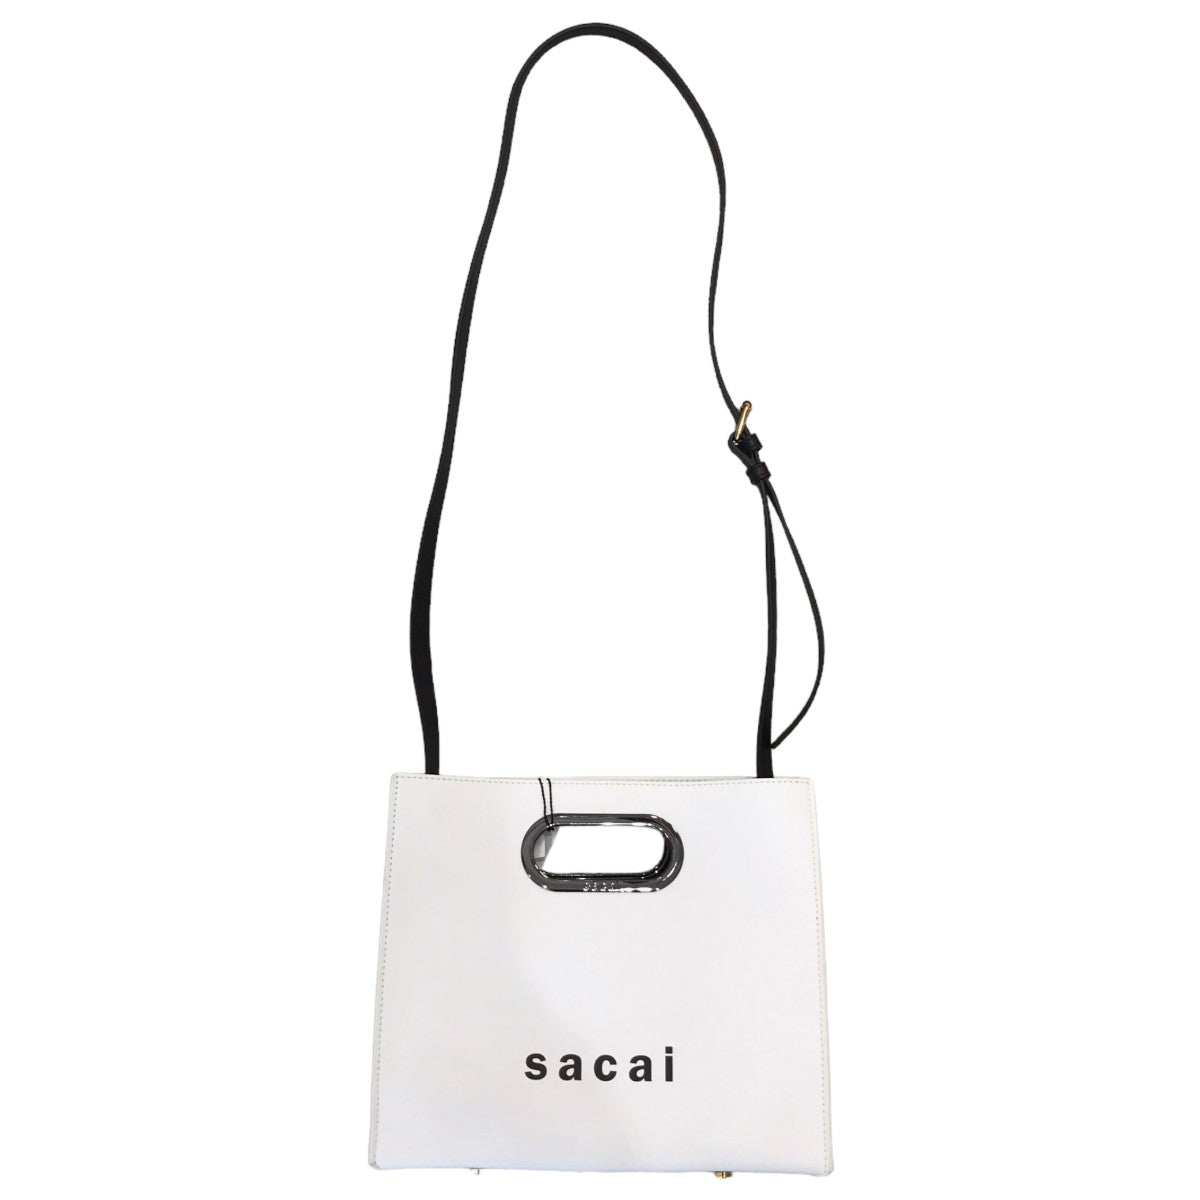 sacai(サカイ) 「New Shopper Bag Small」ショッパーバッグS066 01 S066 01 ホワイト サイズ  16｜【公式】カインドオルオンライン ブランド古着・中古通販【kindal】